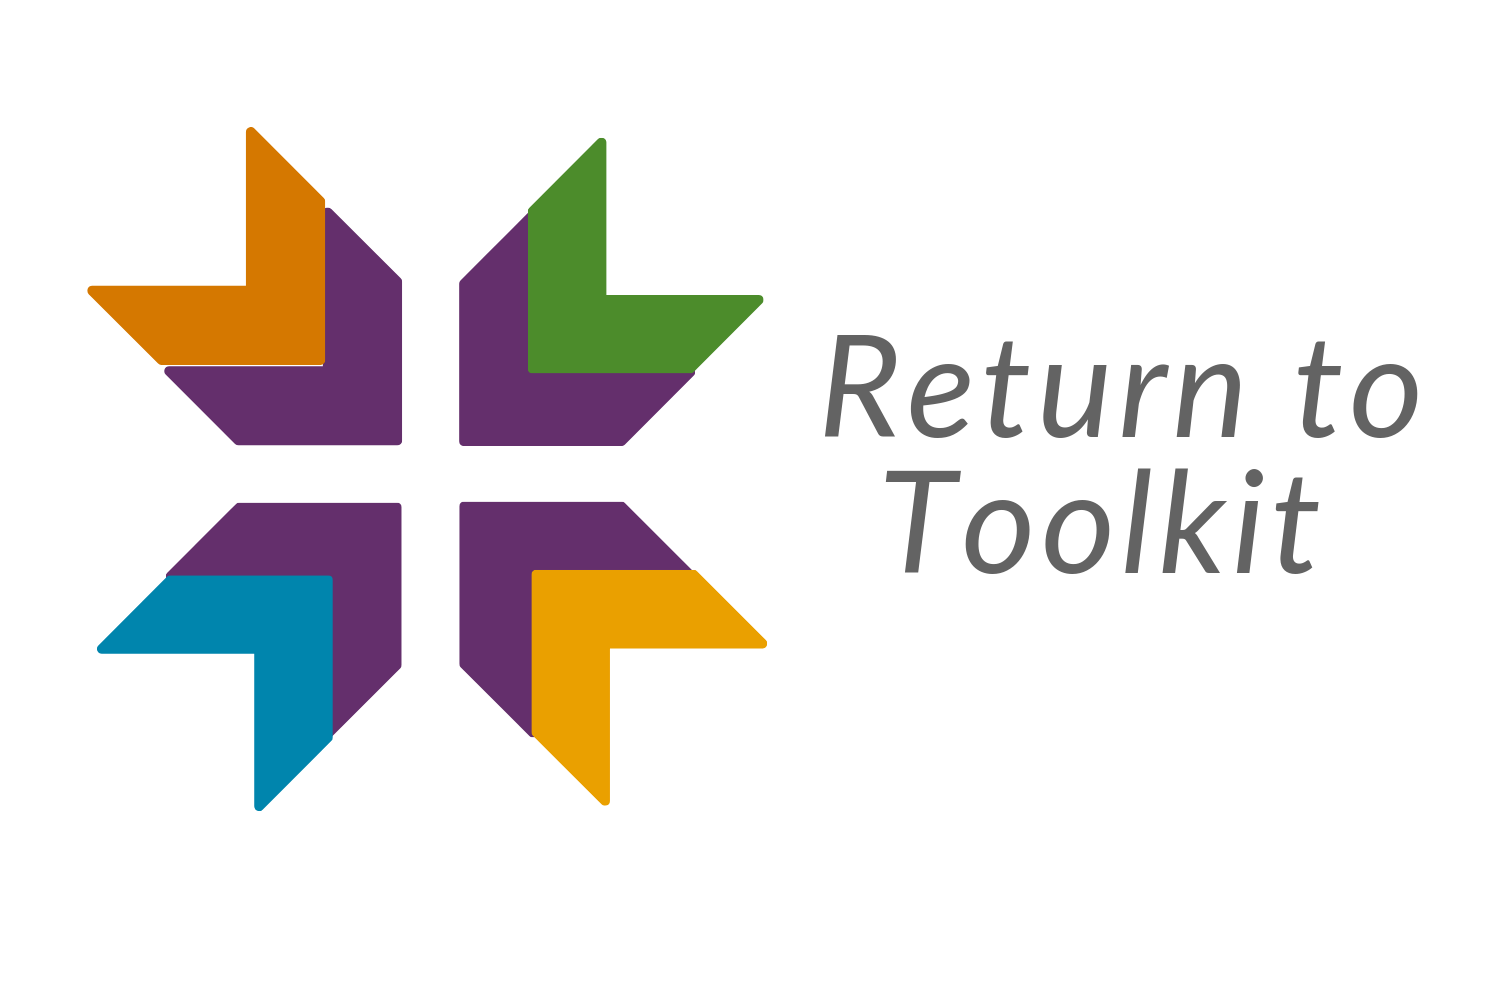 Return to Toolkit